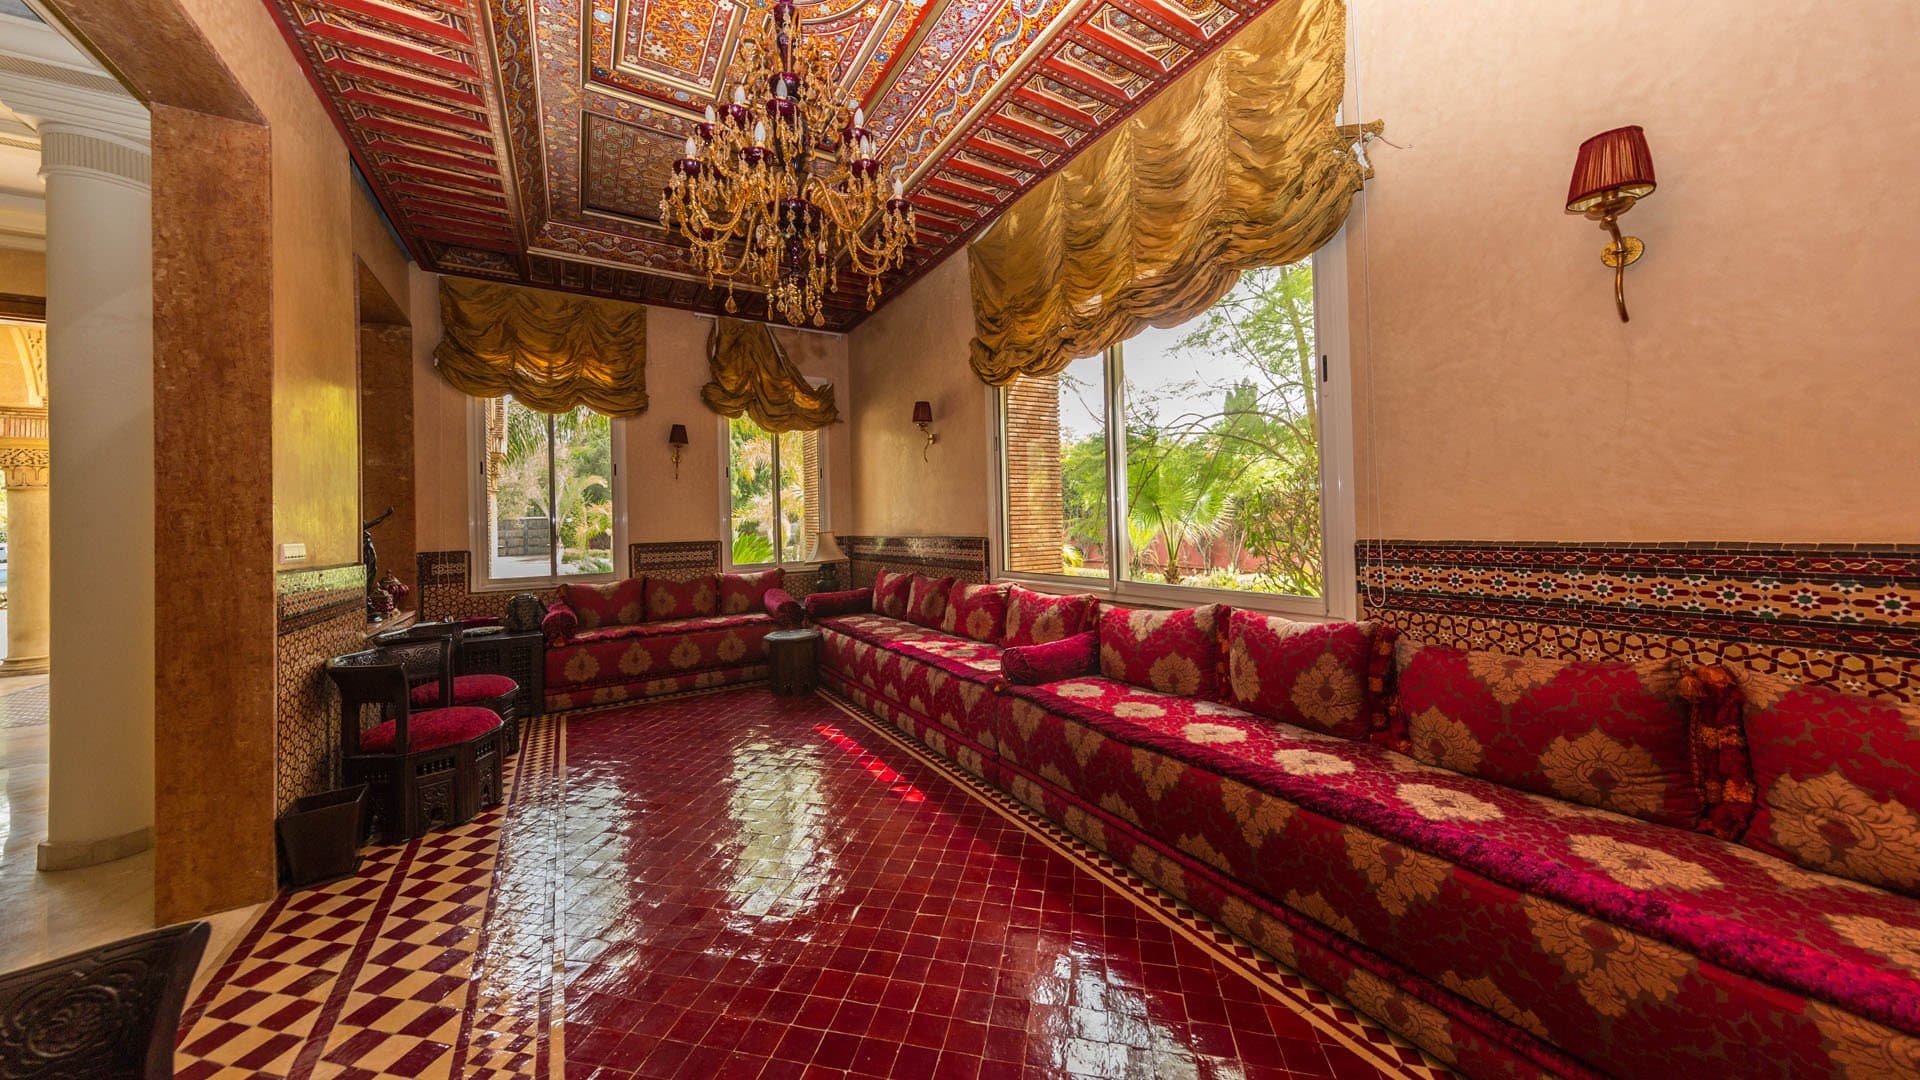 6 Bedroom Villa For Sale Marrakech Lp08722 1bc16d57ed9e4f00.jpg